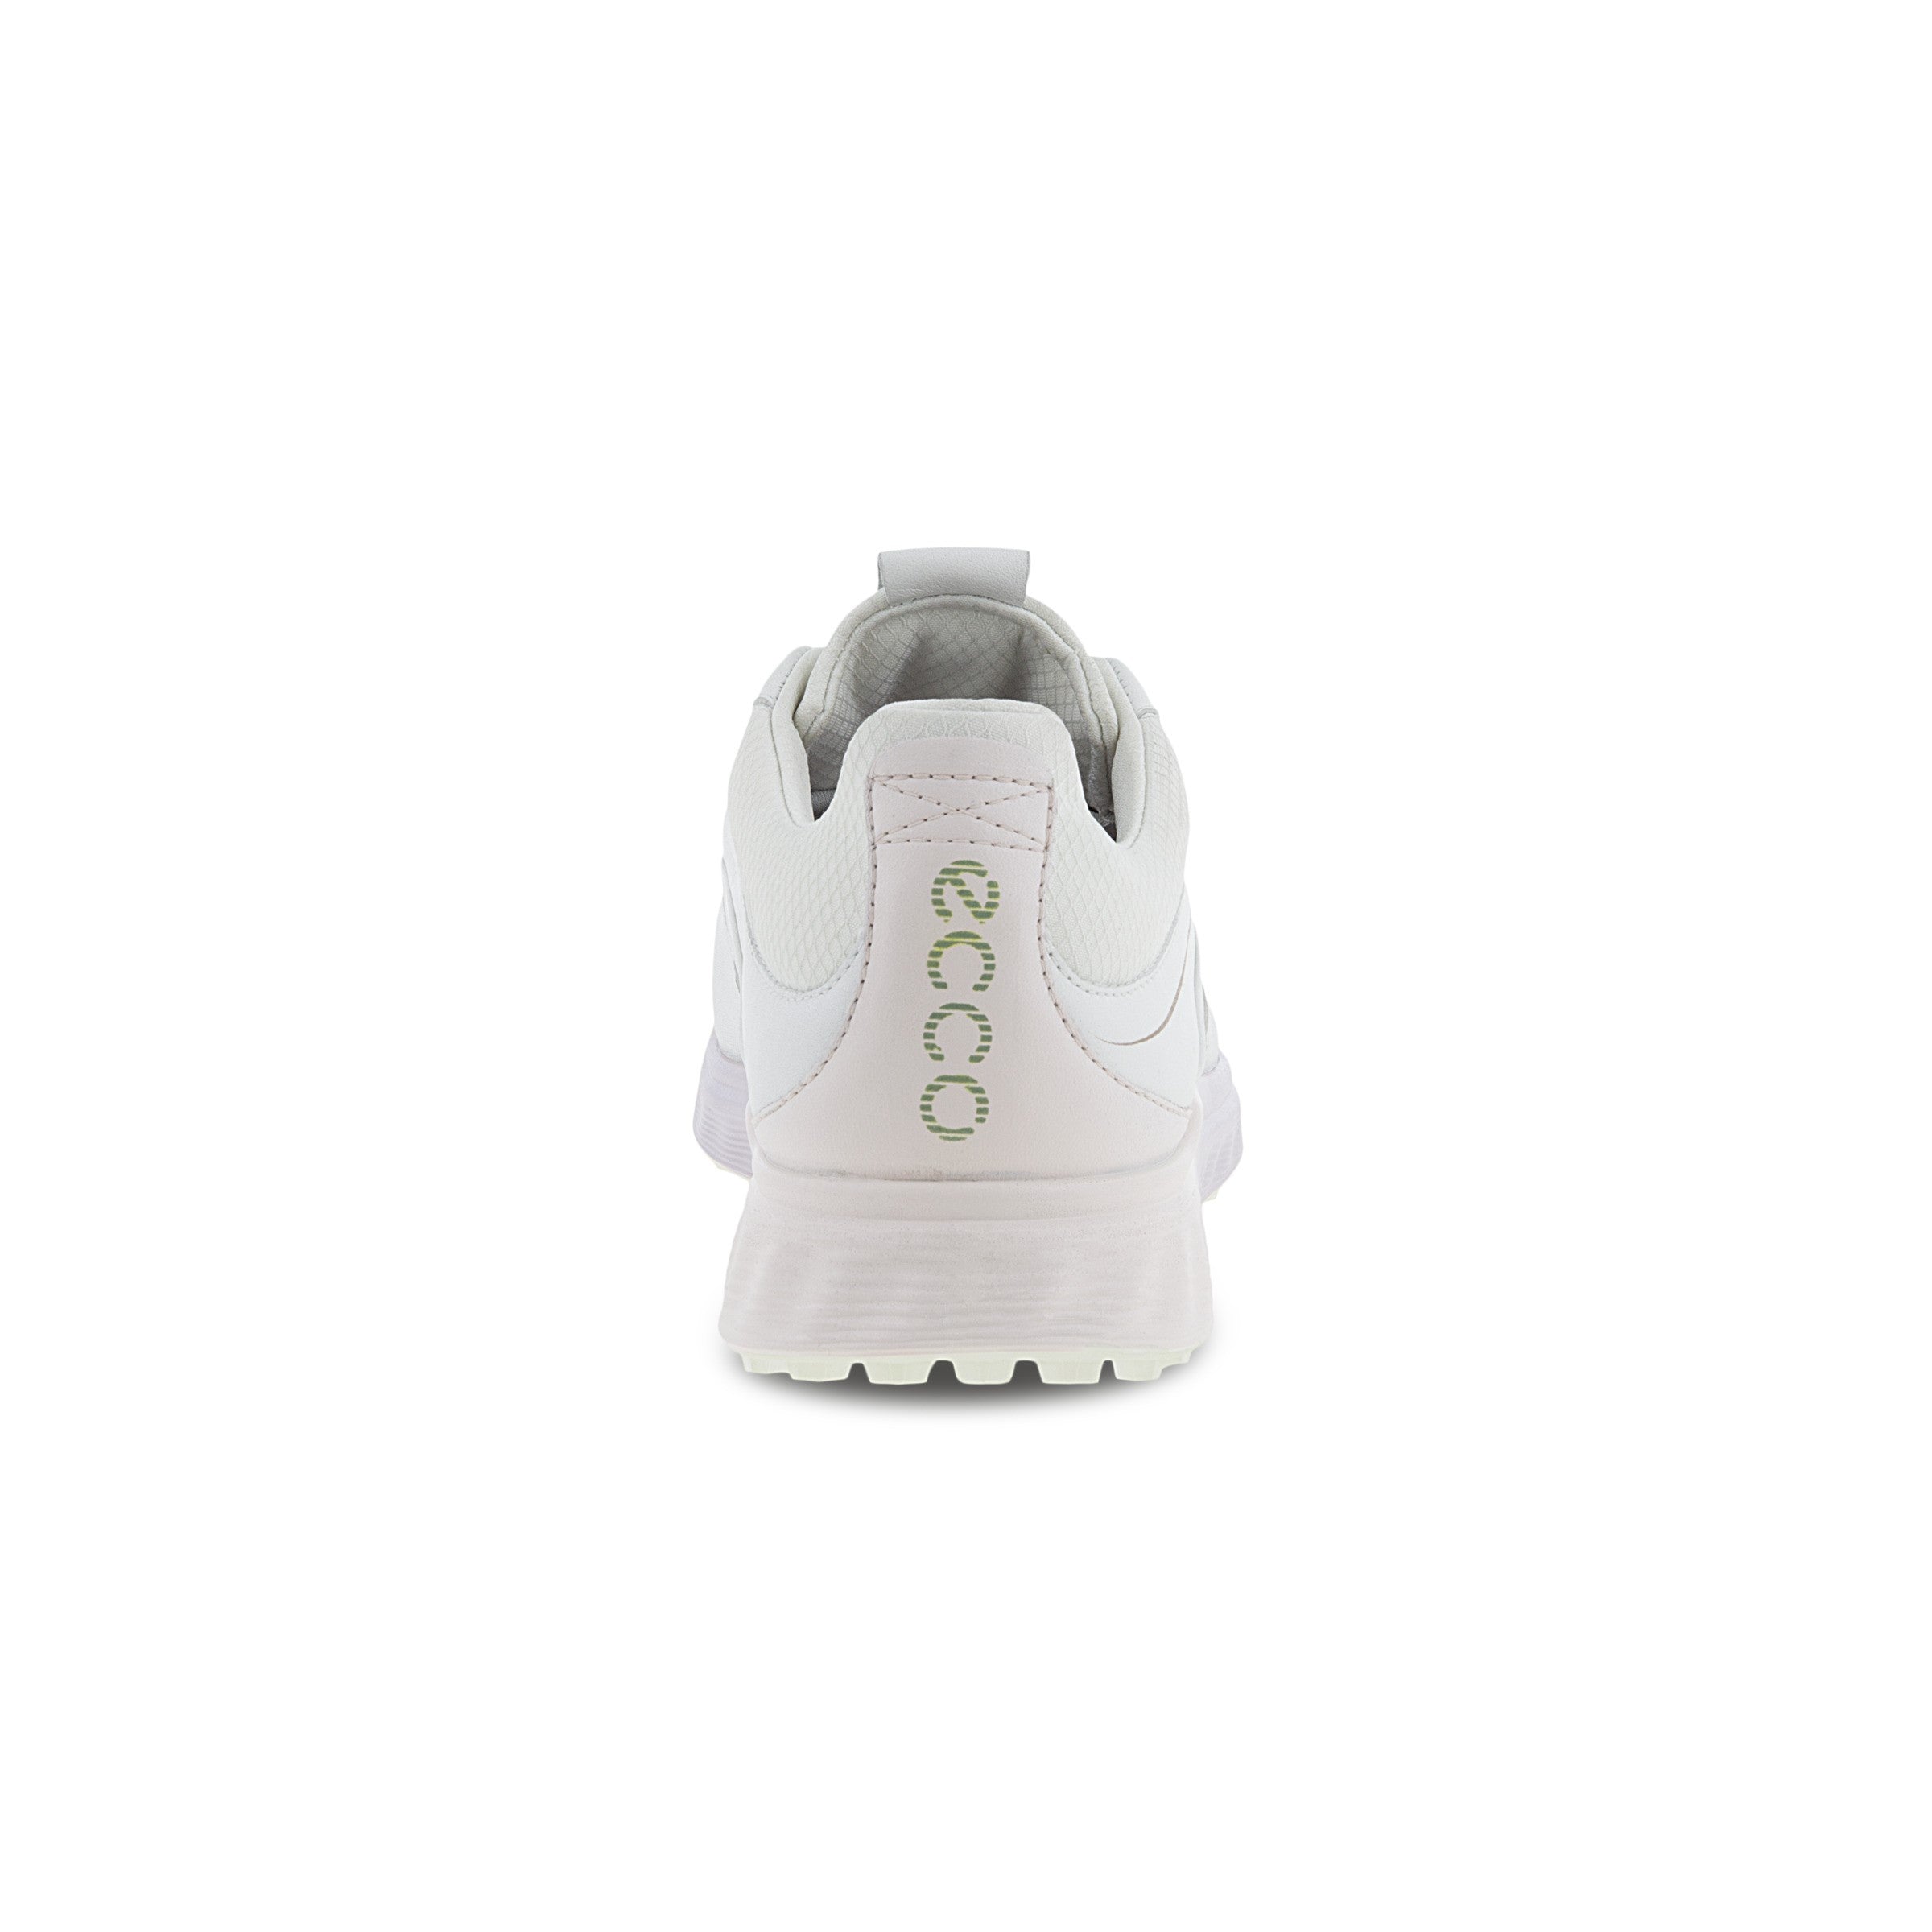 Ecco Ladies S Three BOA Golf Shoes